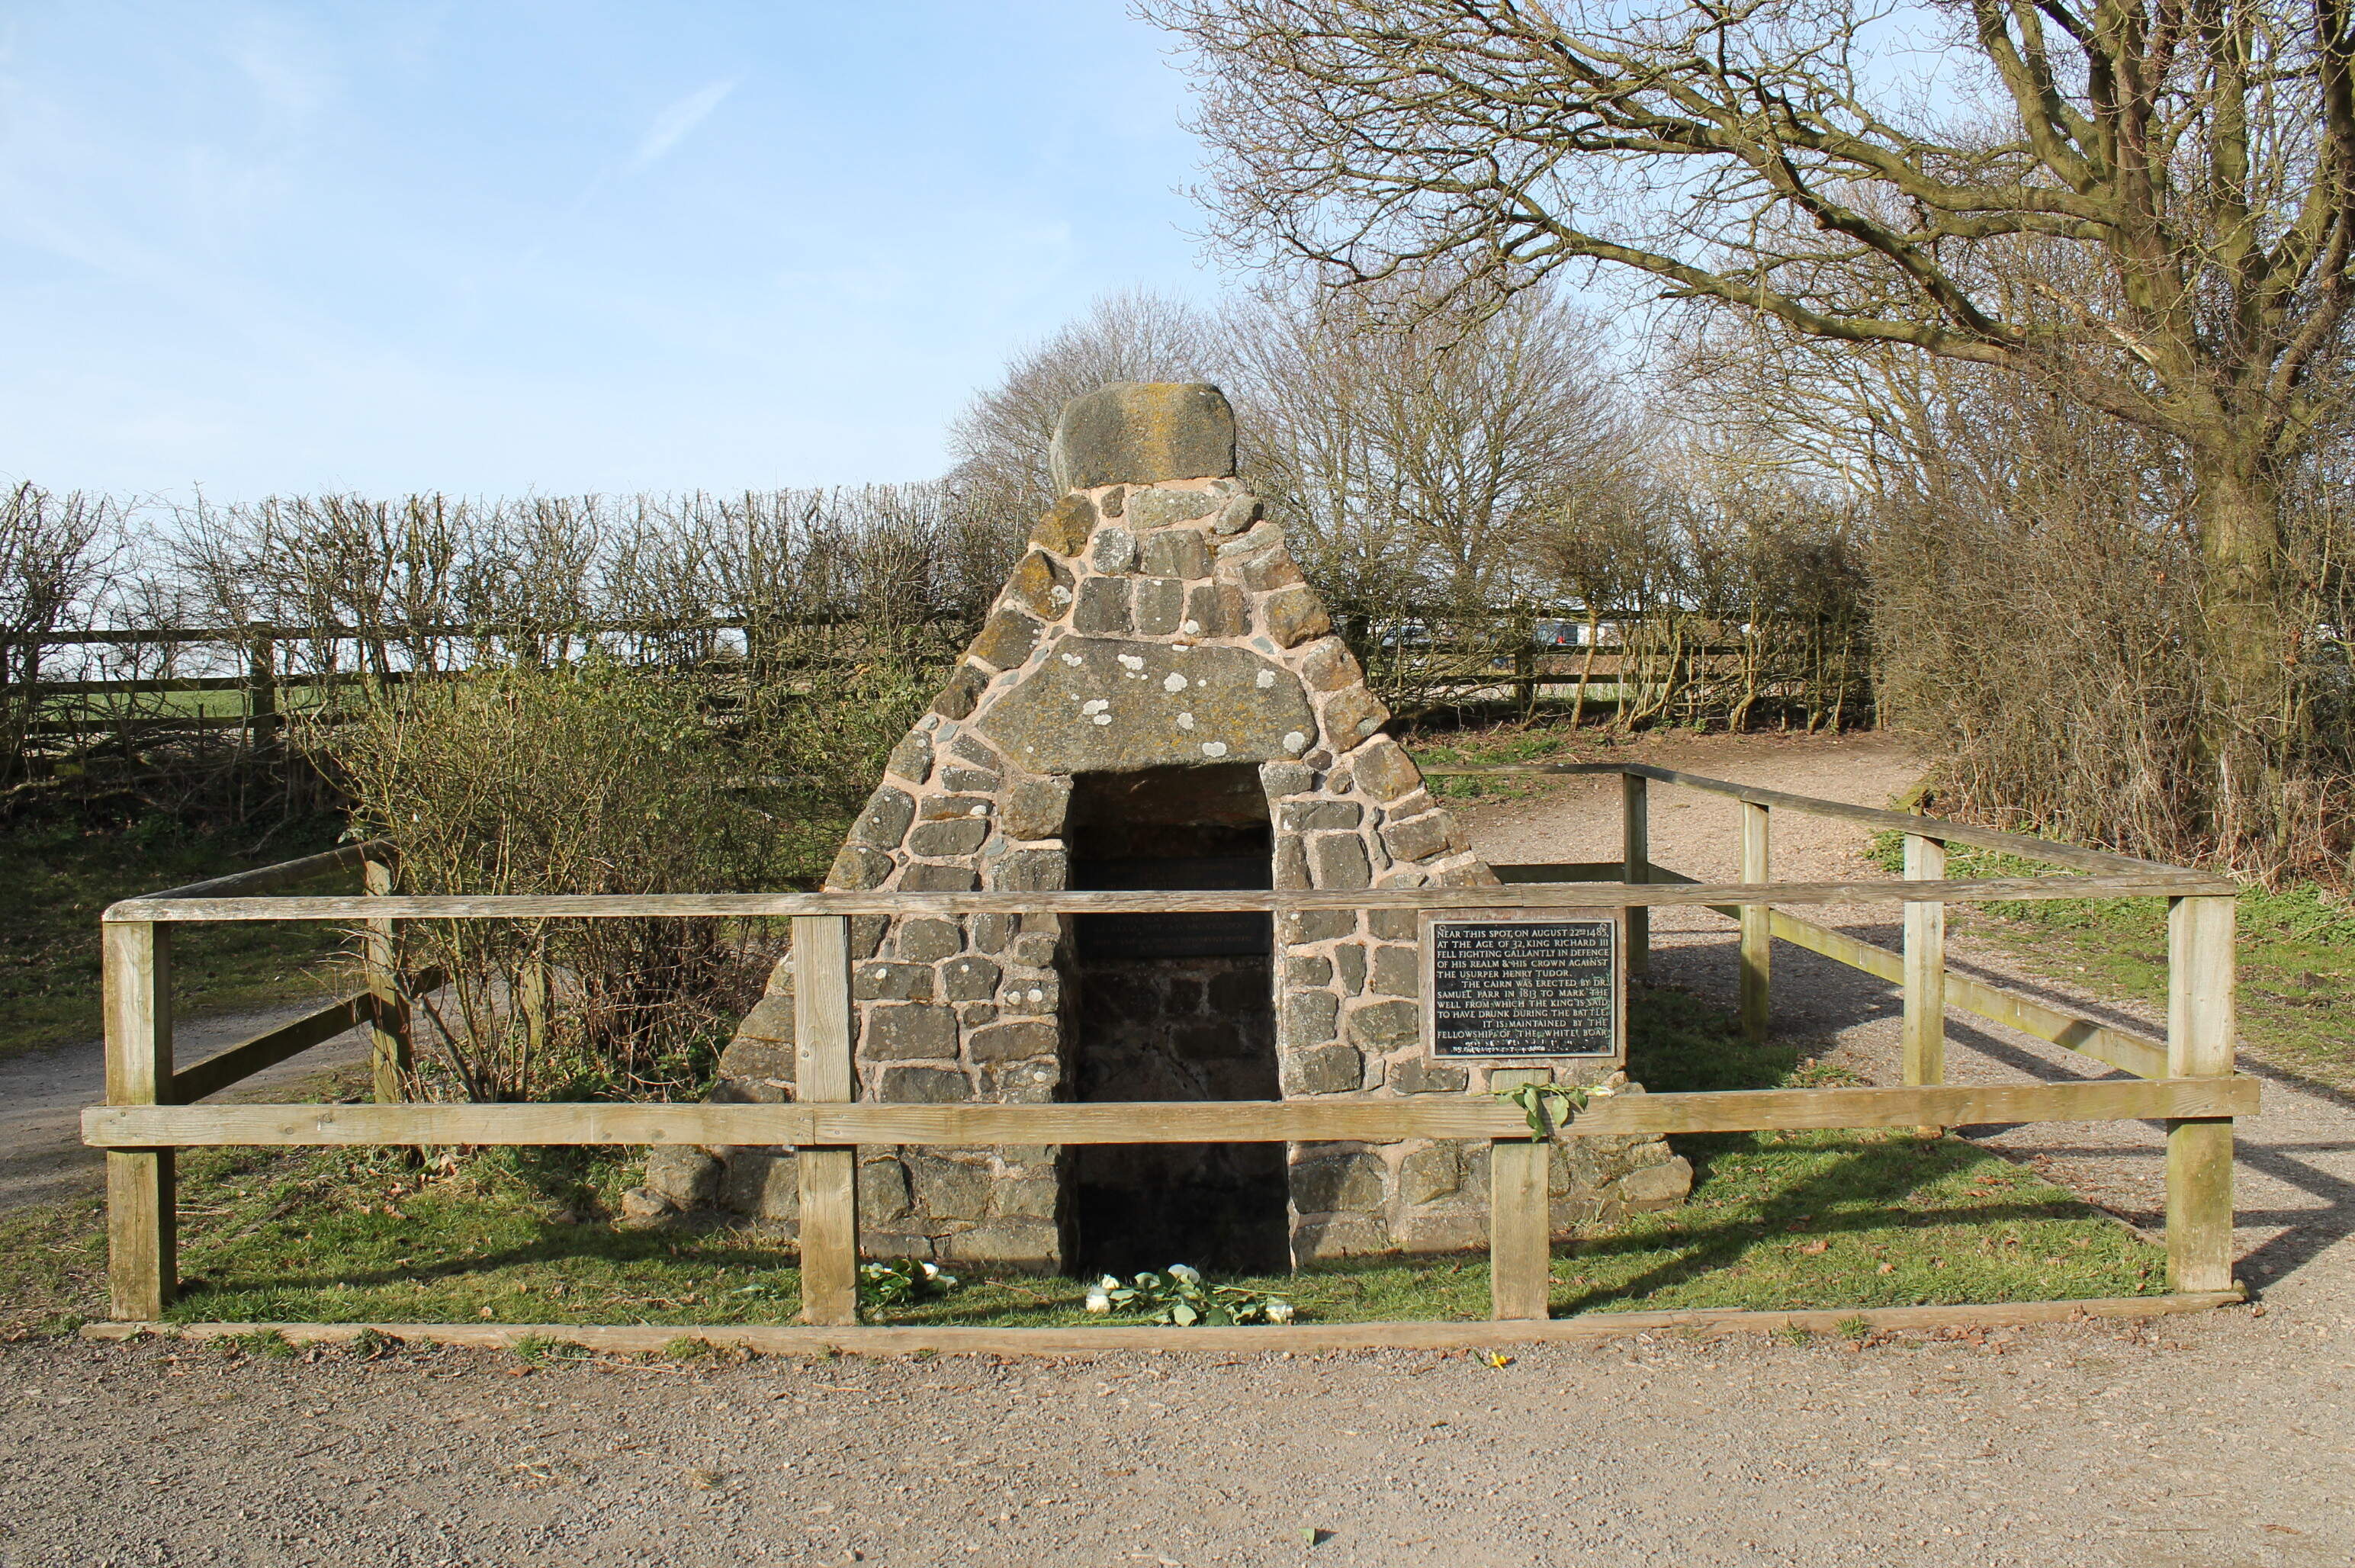 King Richard's well